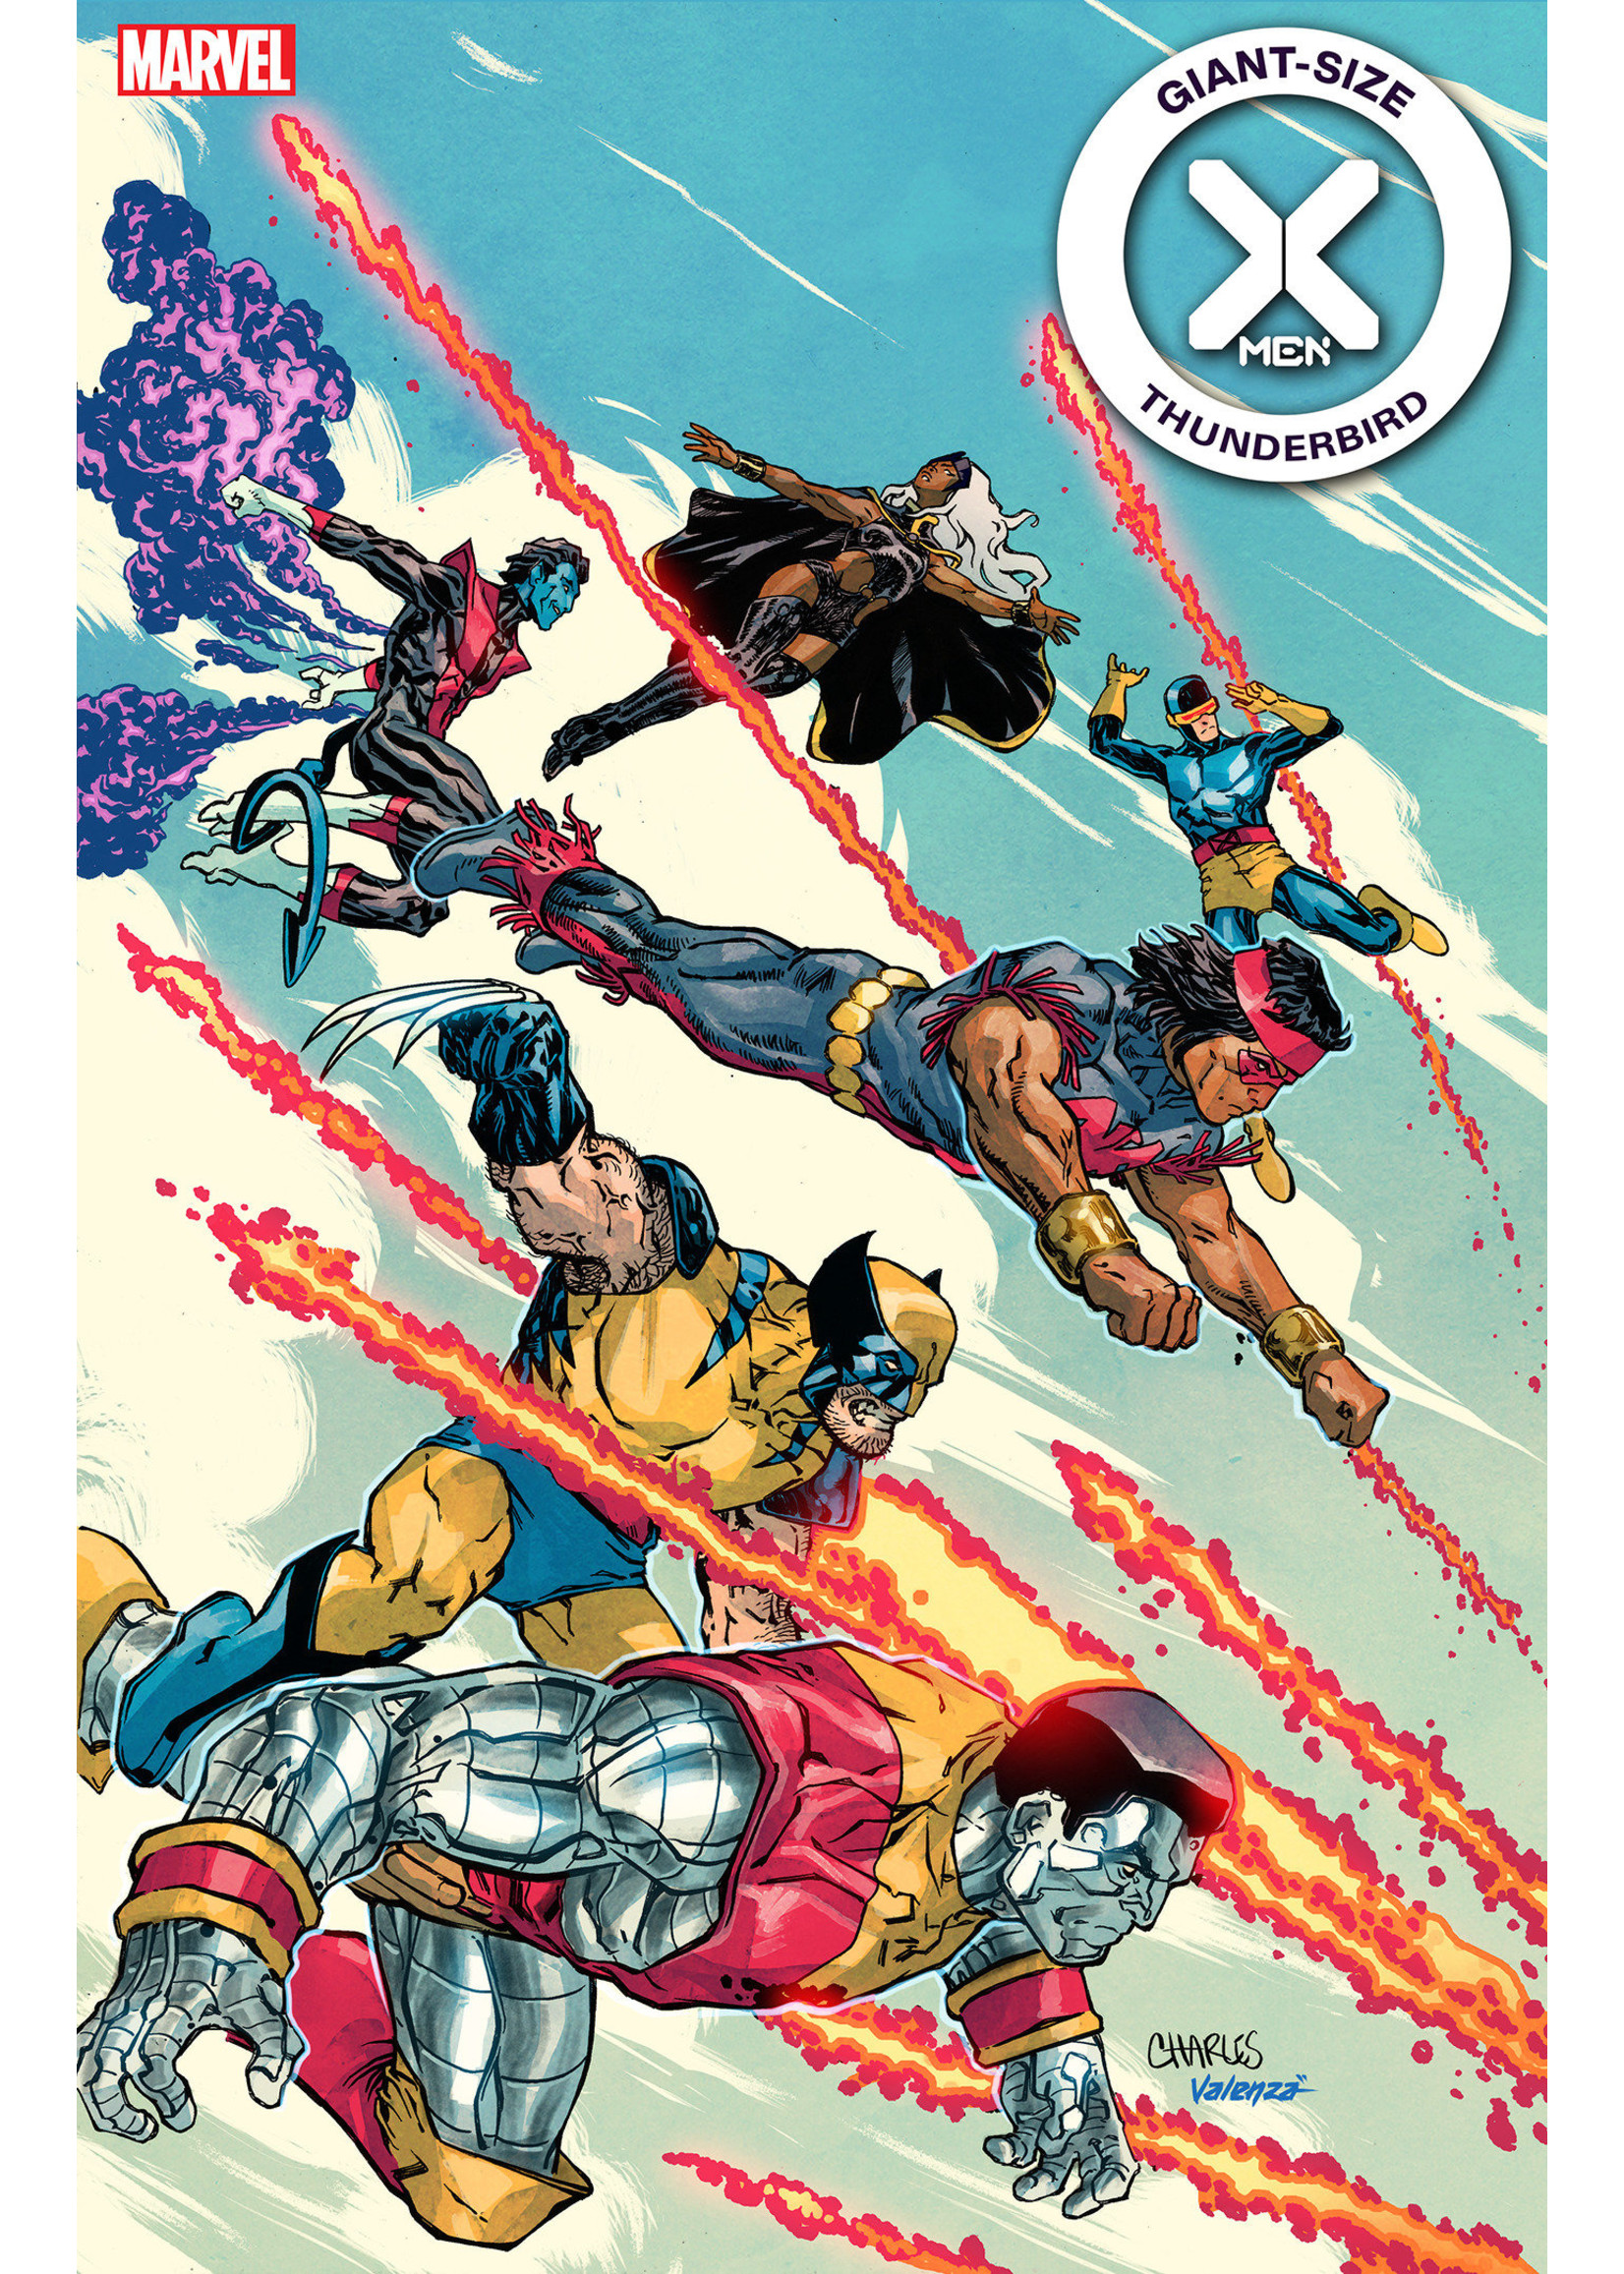 X-Men Giant-Size X-Men: Thunderbird 1